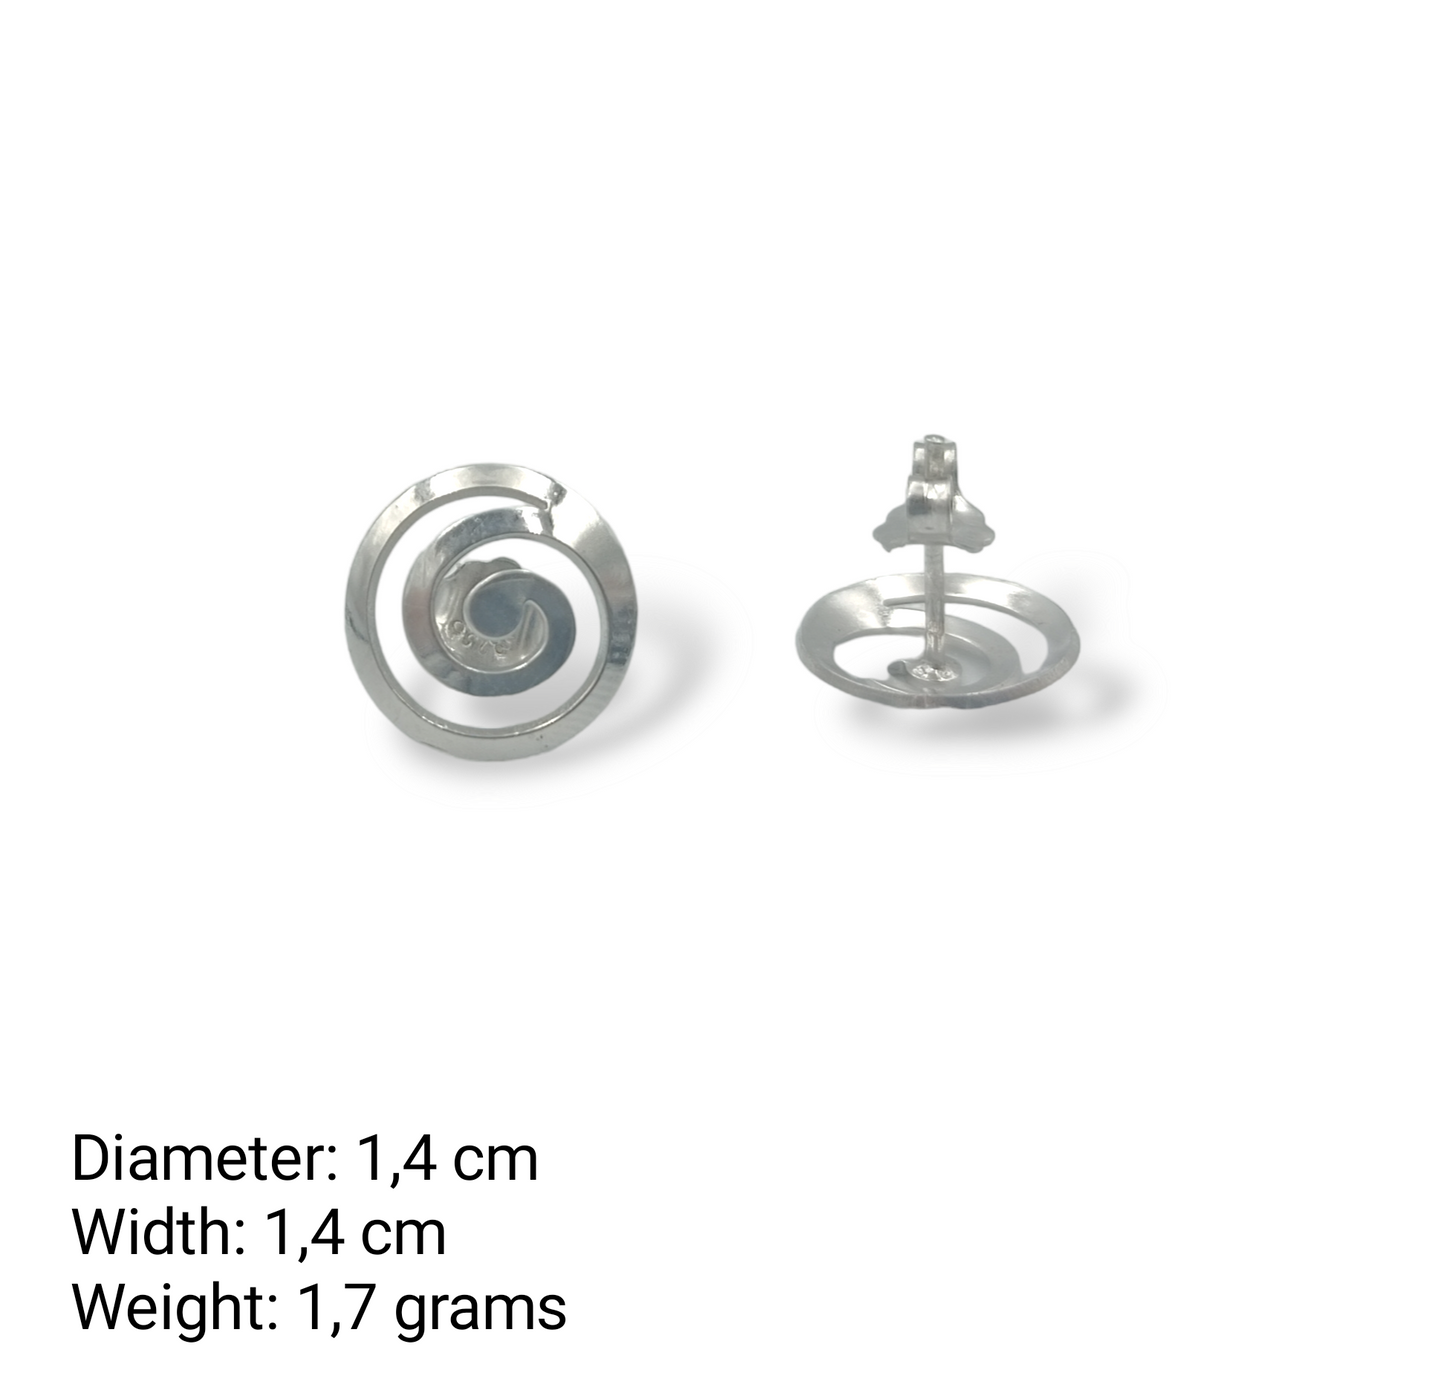 Silver Spiral design earrings